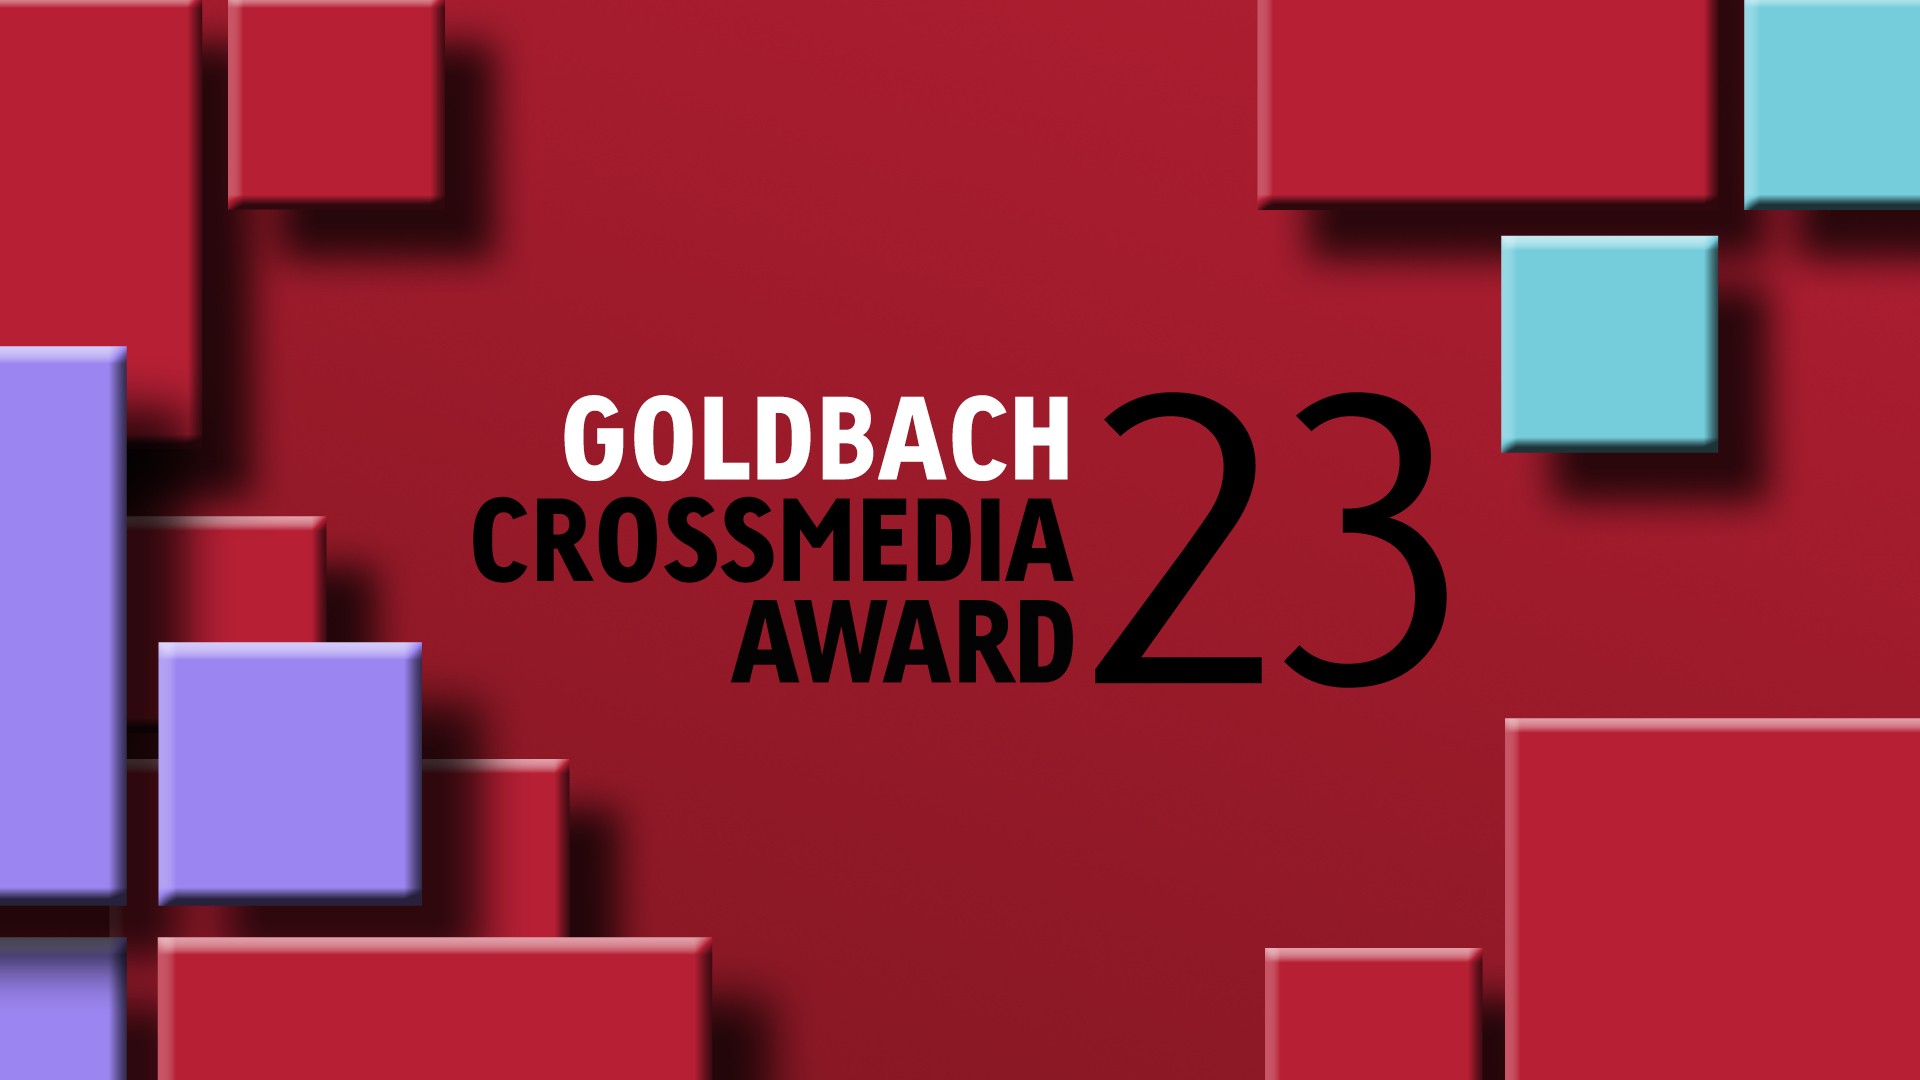 GB_Crossmedia Award23_Visual.jpg